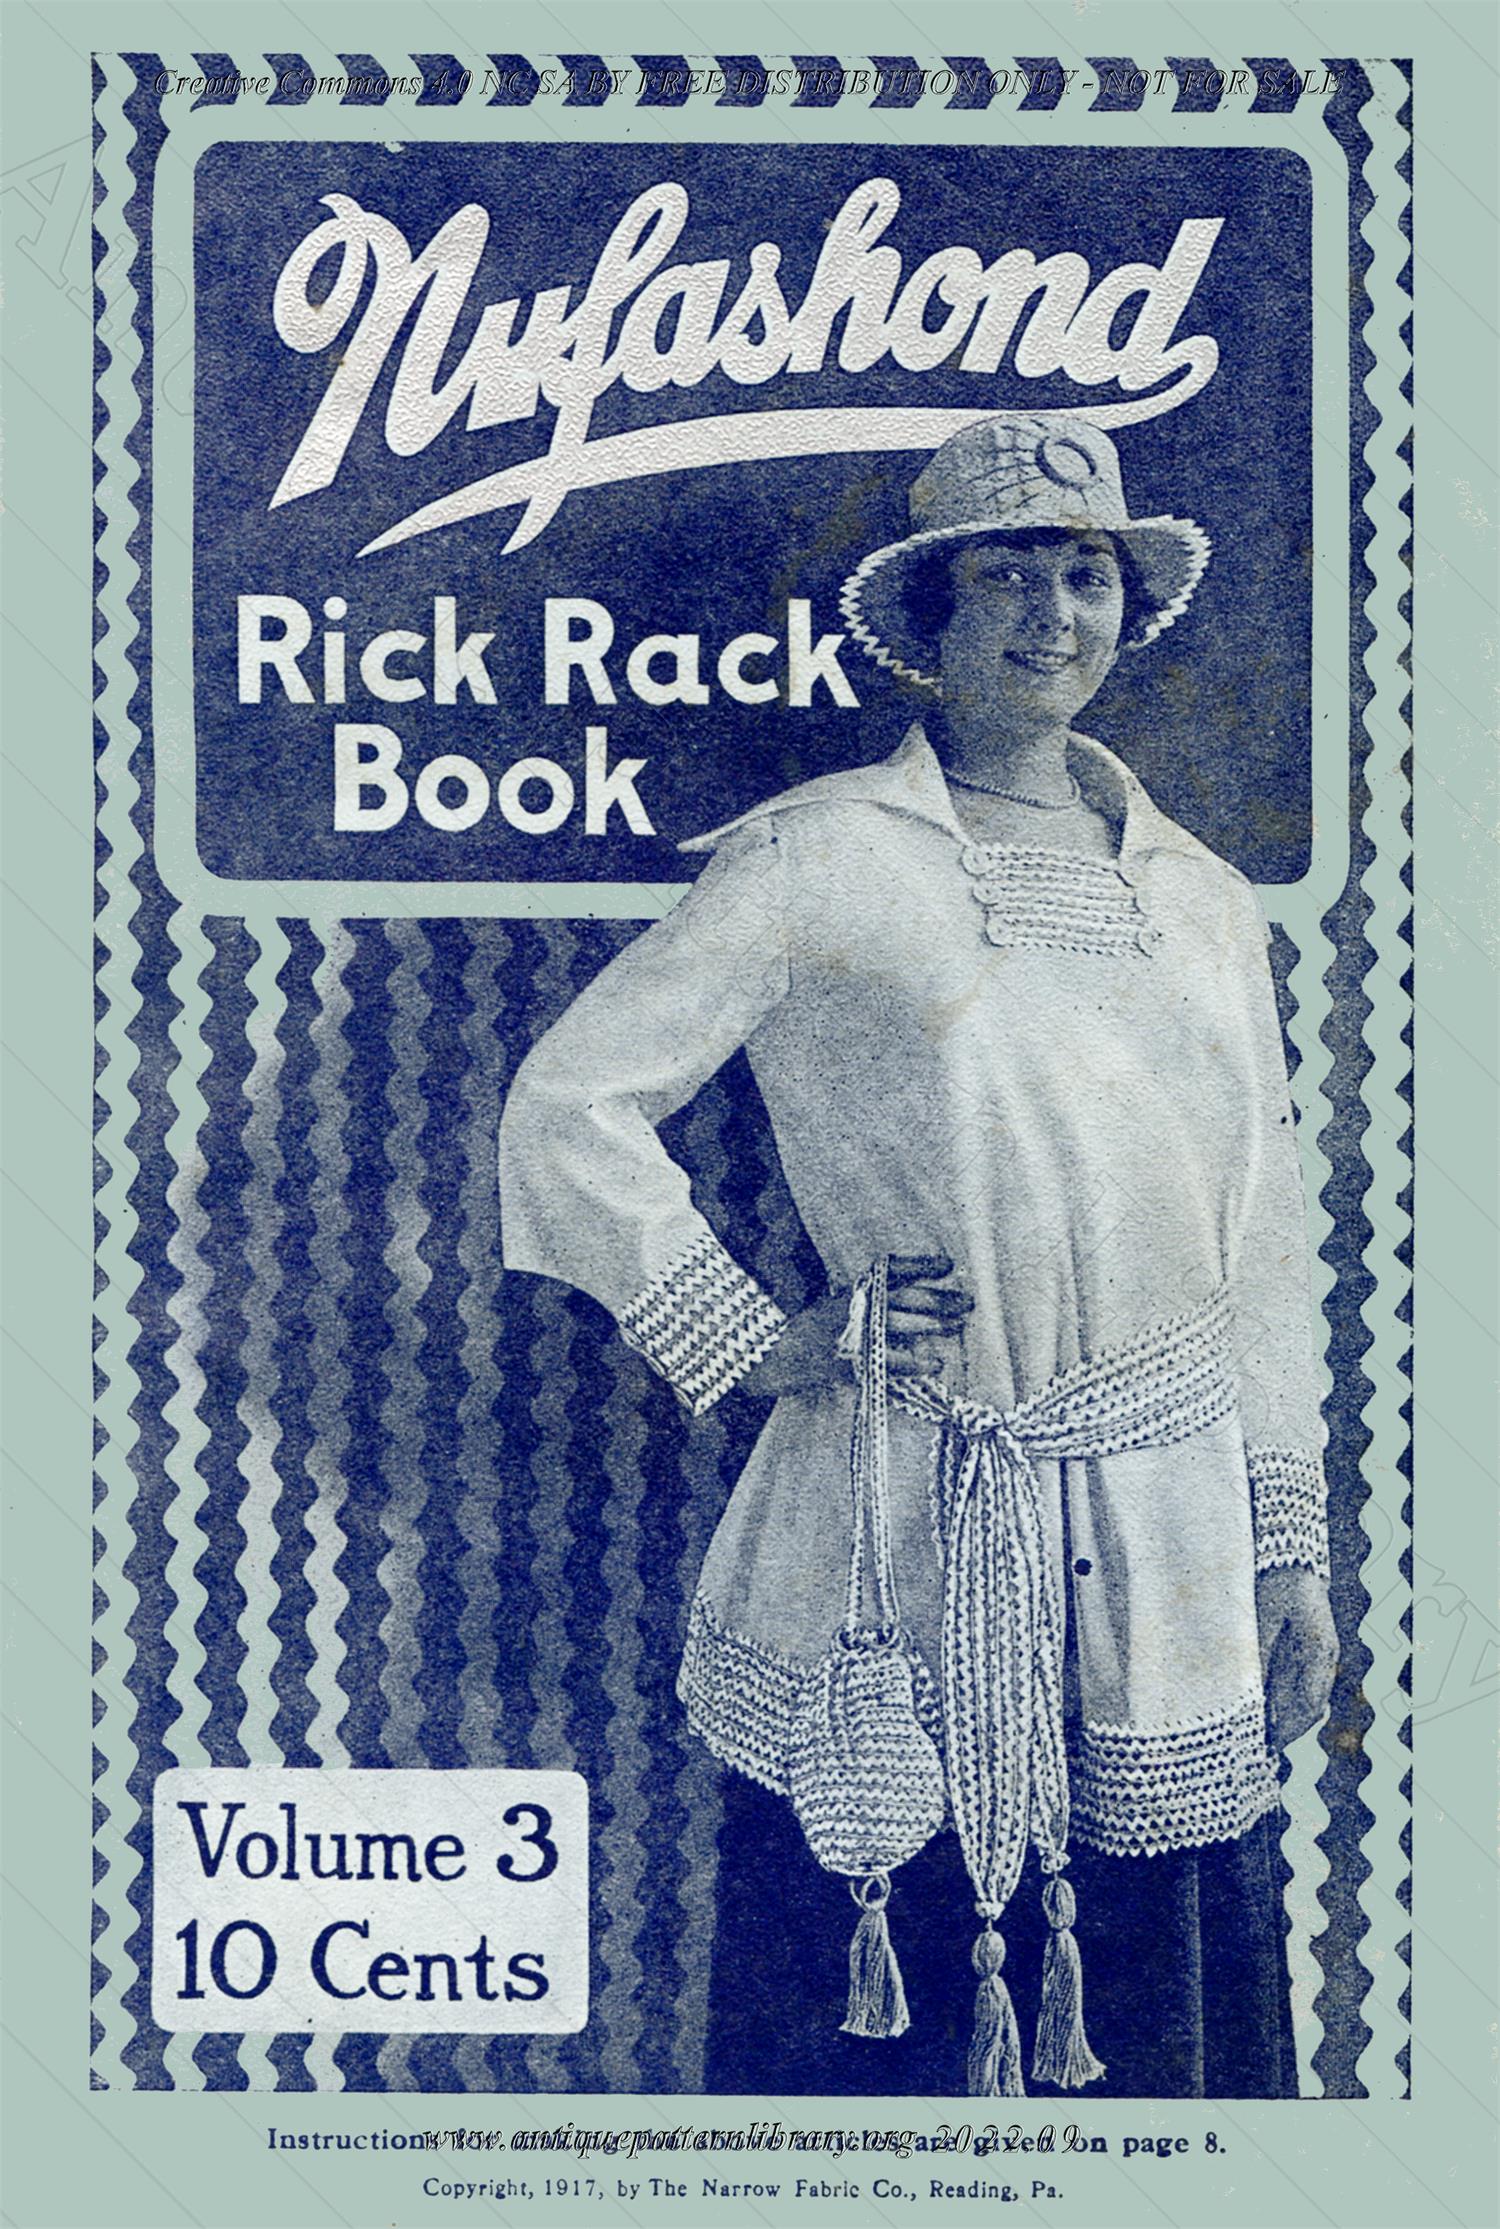 K-HW002 Nufashond Rick Rack Book